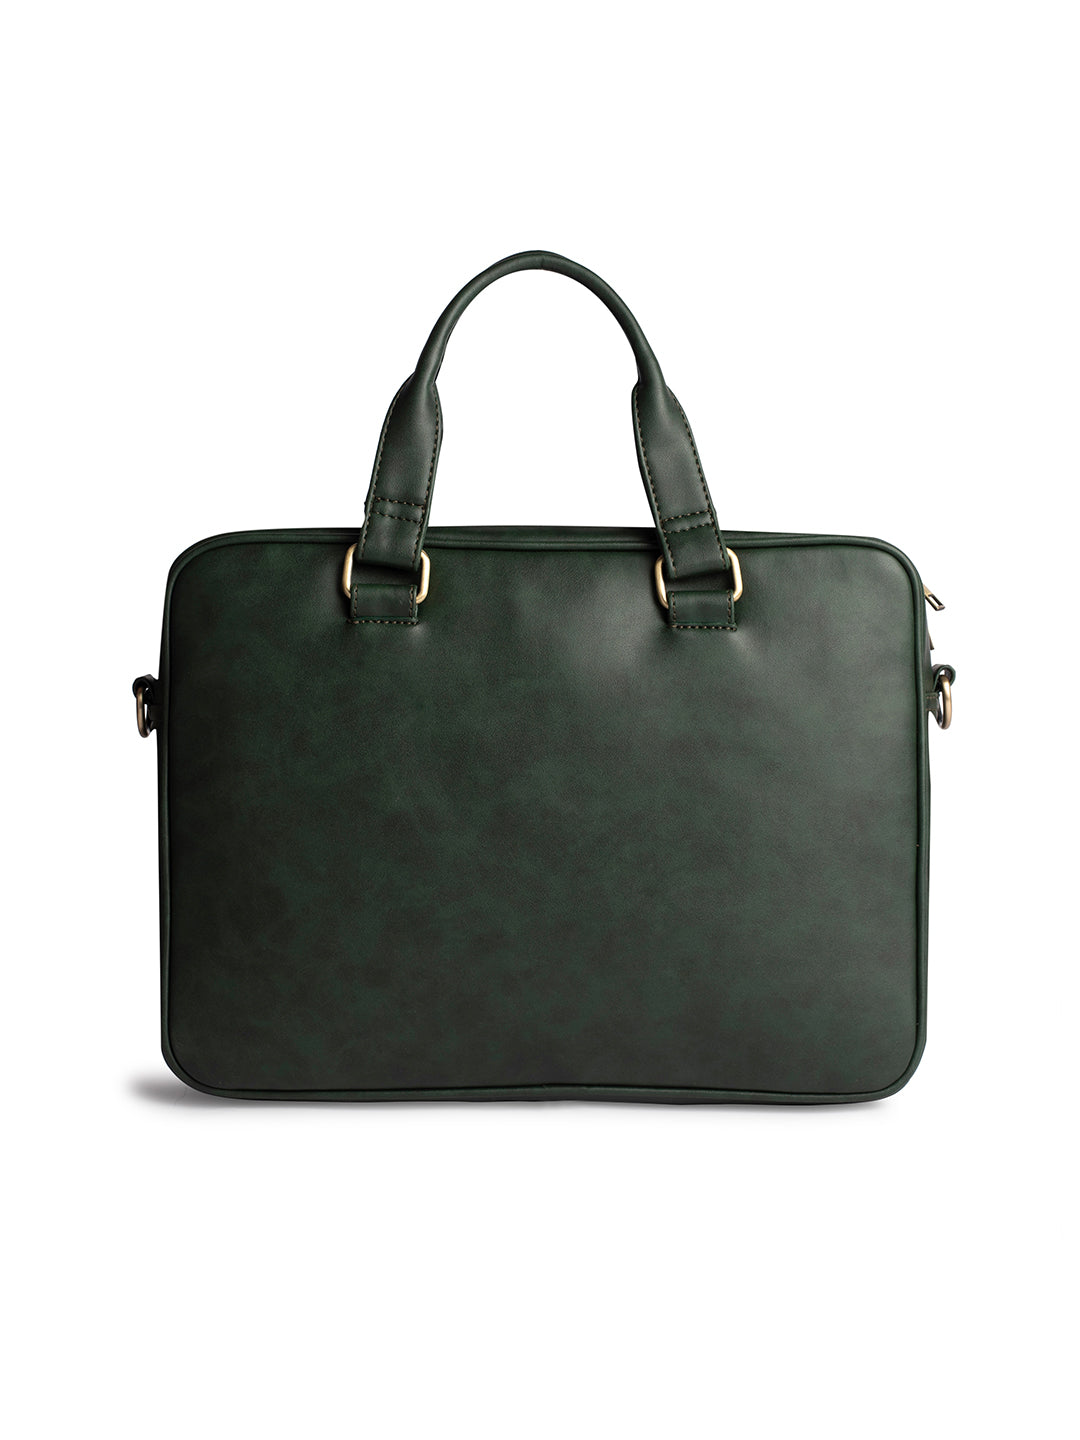 Gauge Machine 16" Olive Green Laptop Bag with Detachable Strap